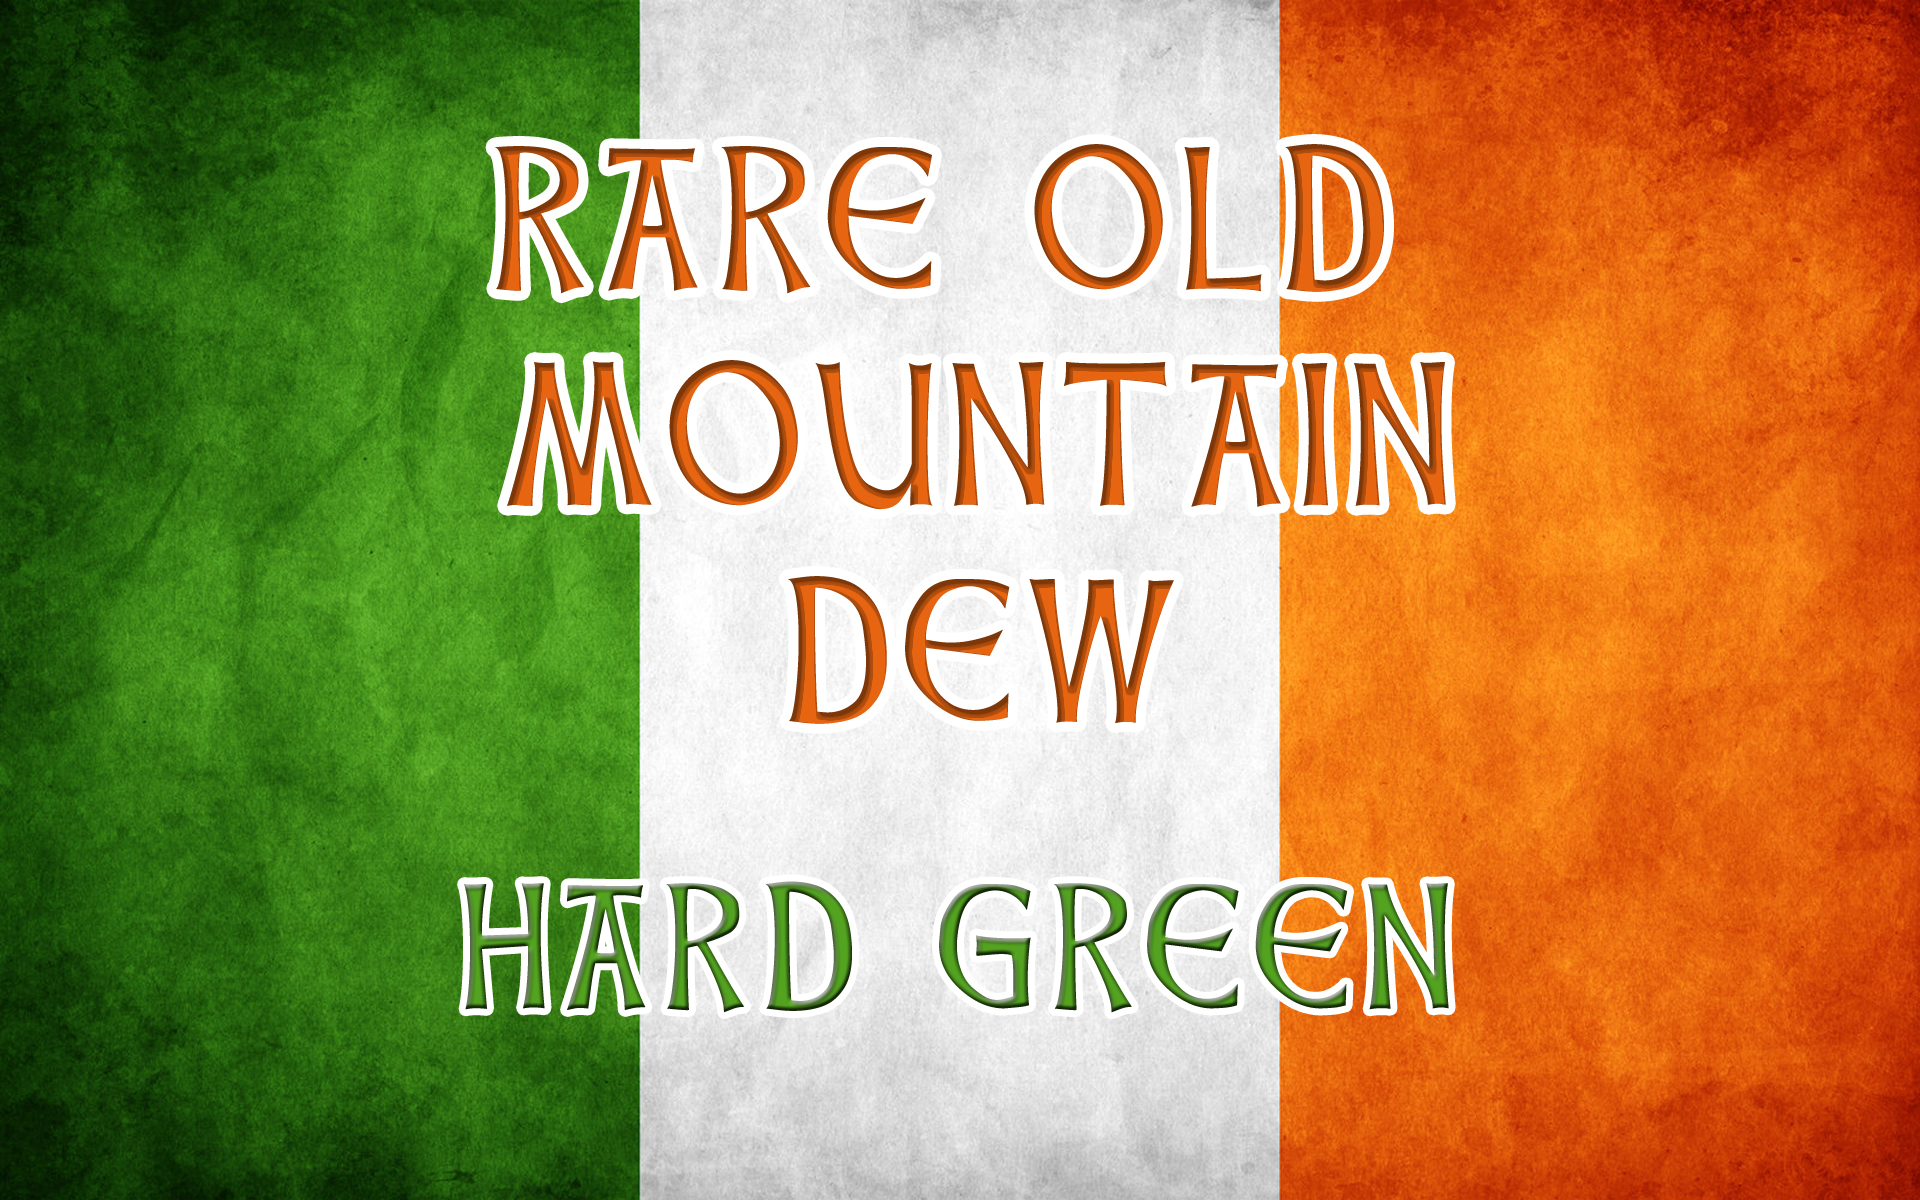 Rare Old Mountain Dew - Irish drinking songs - Hard Green